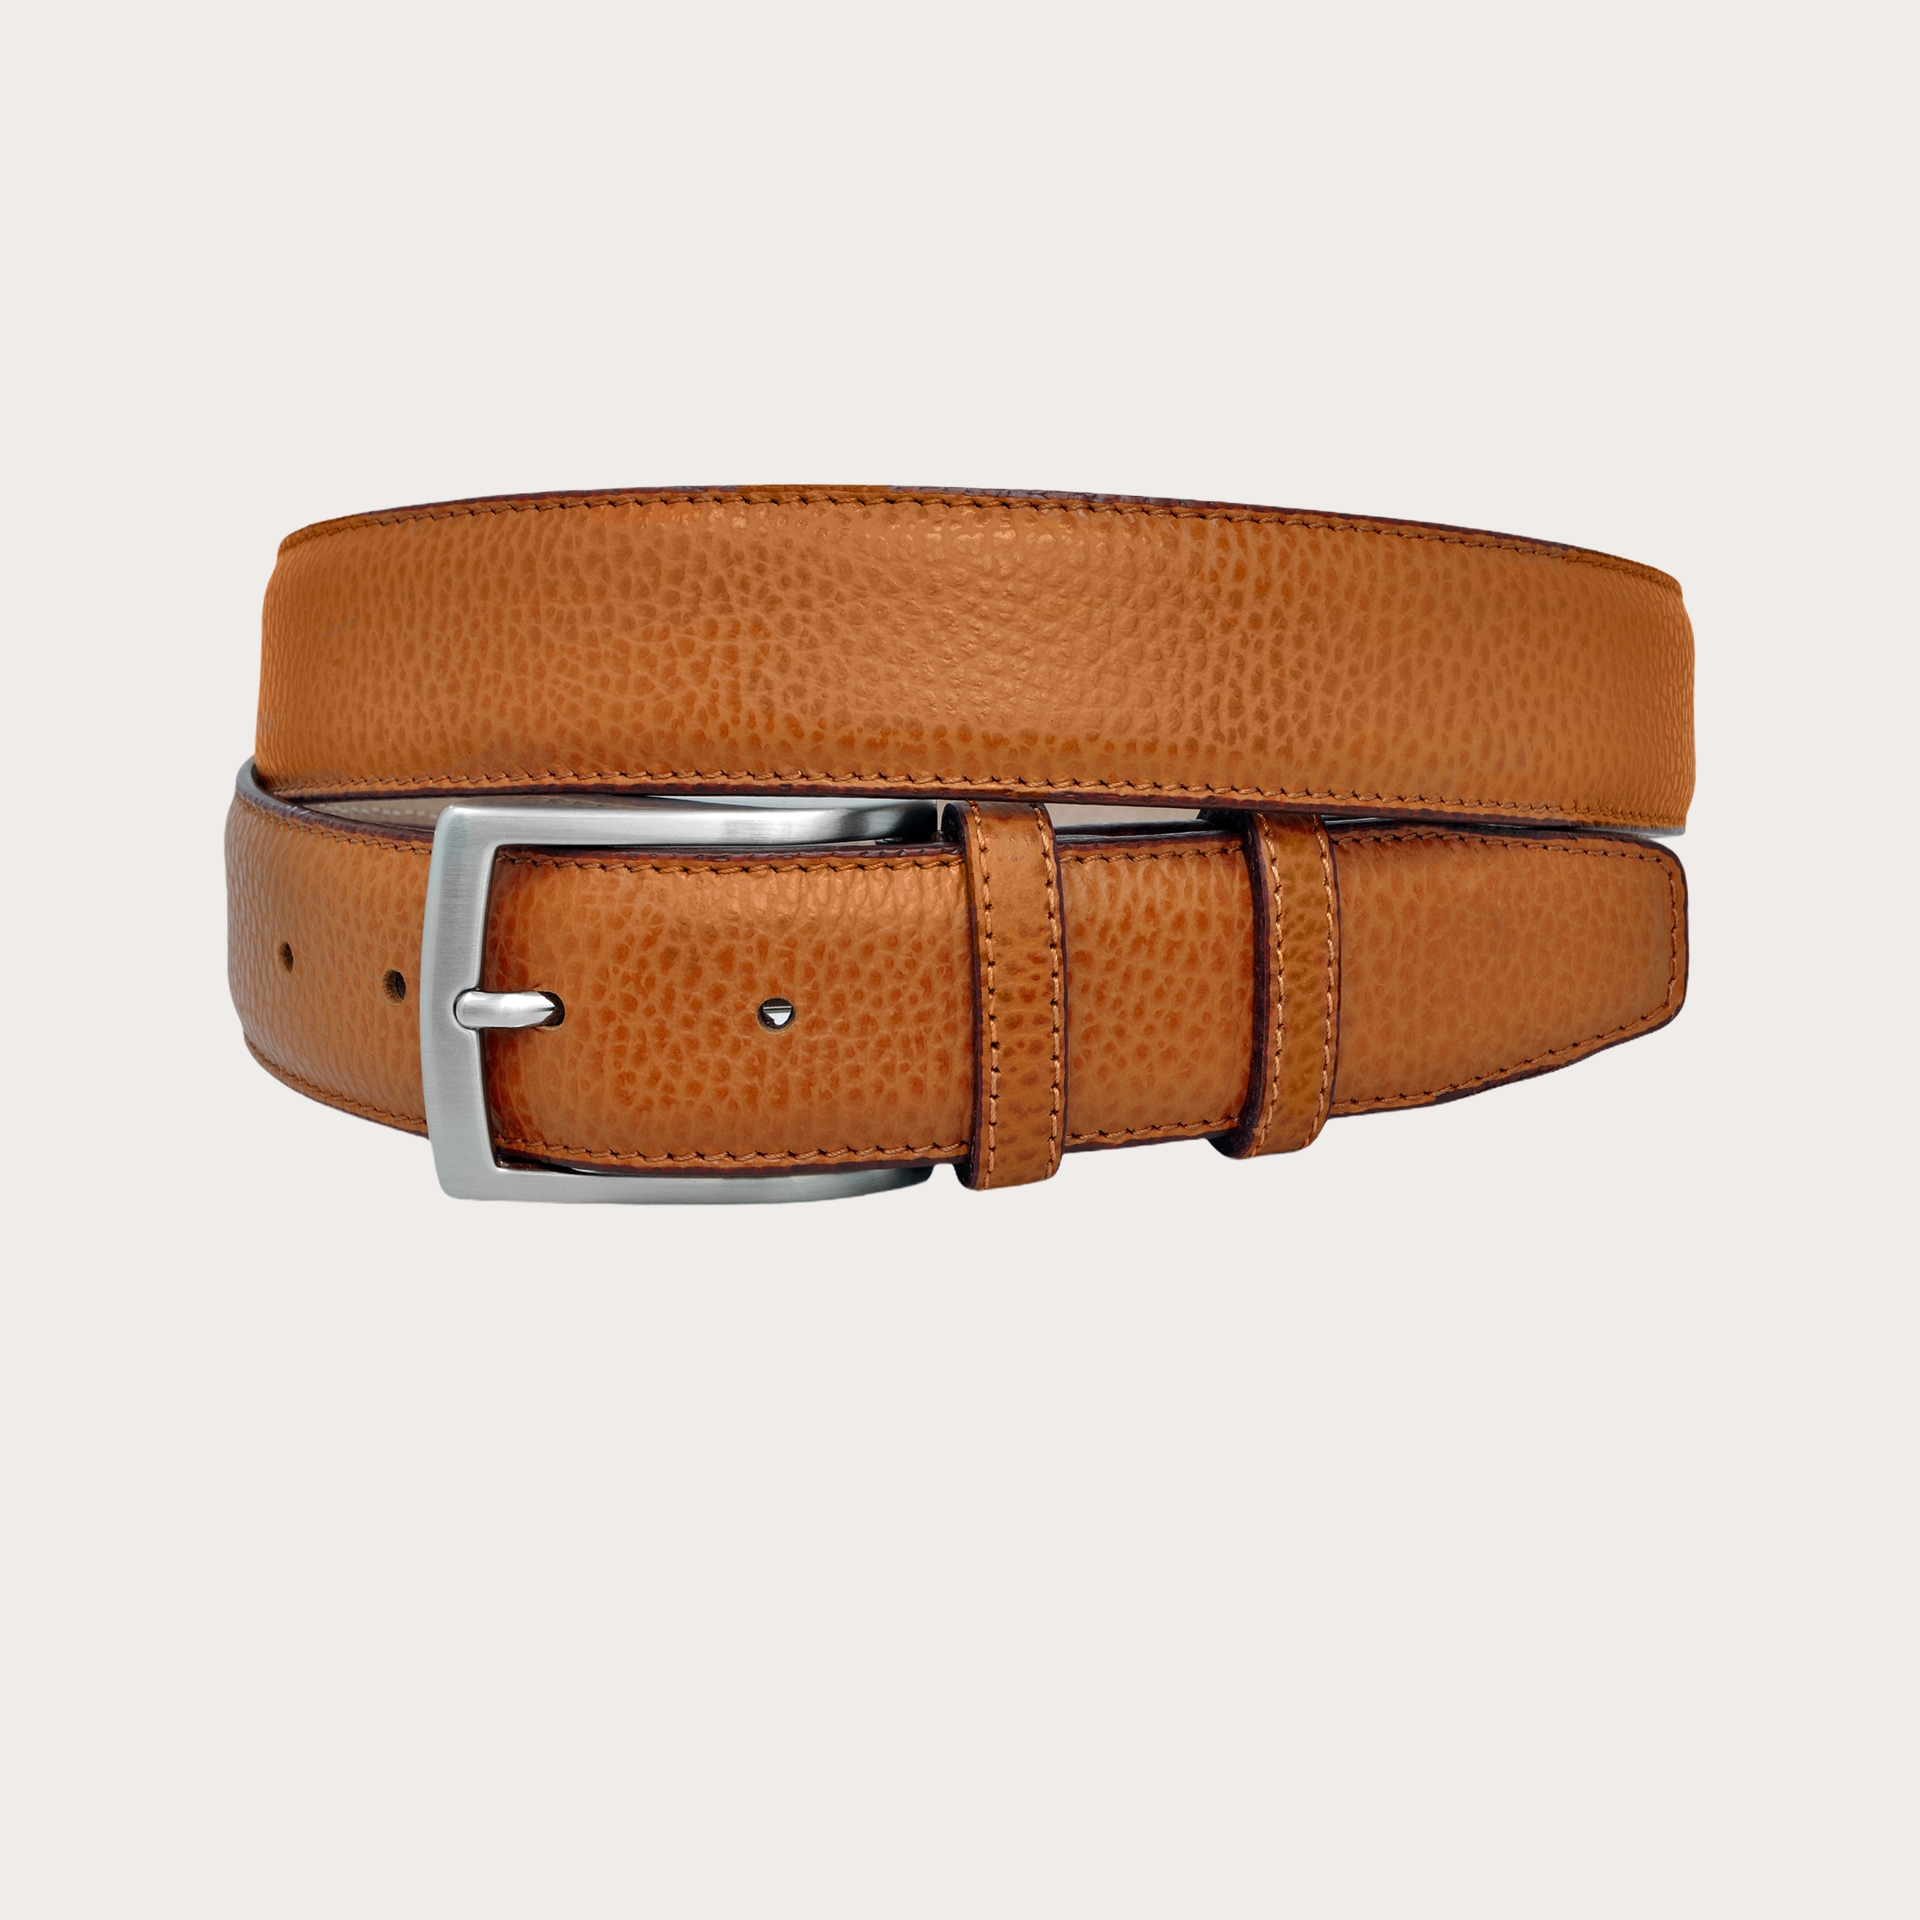 BRUCLE Brown-colored drummed leather belt